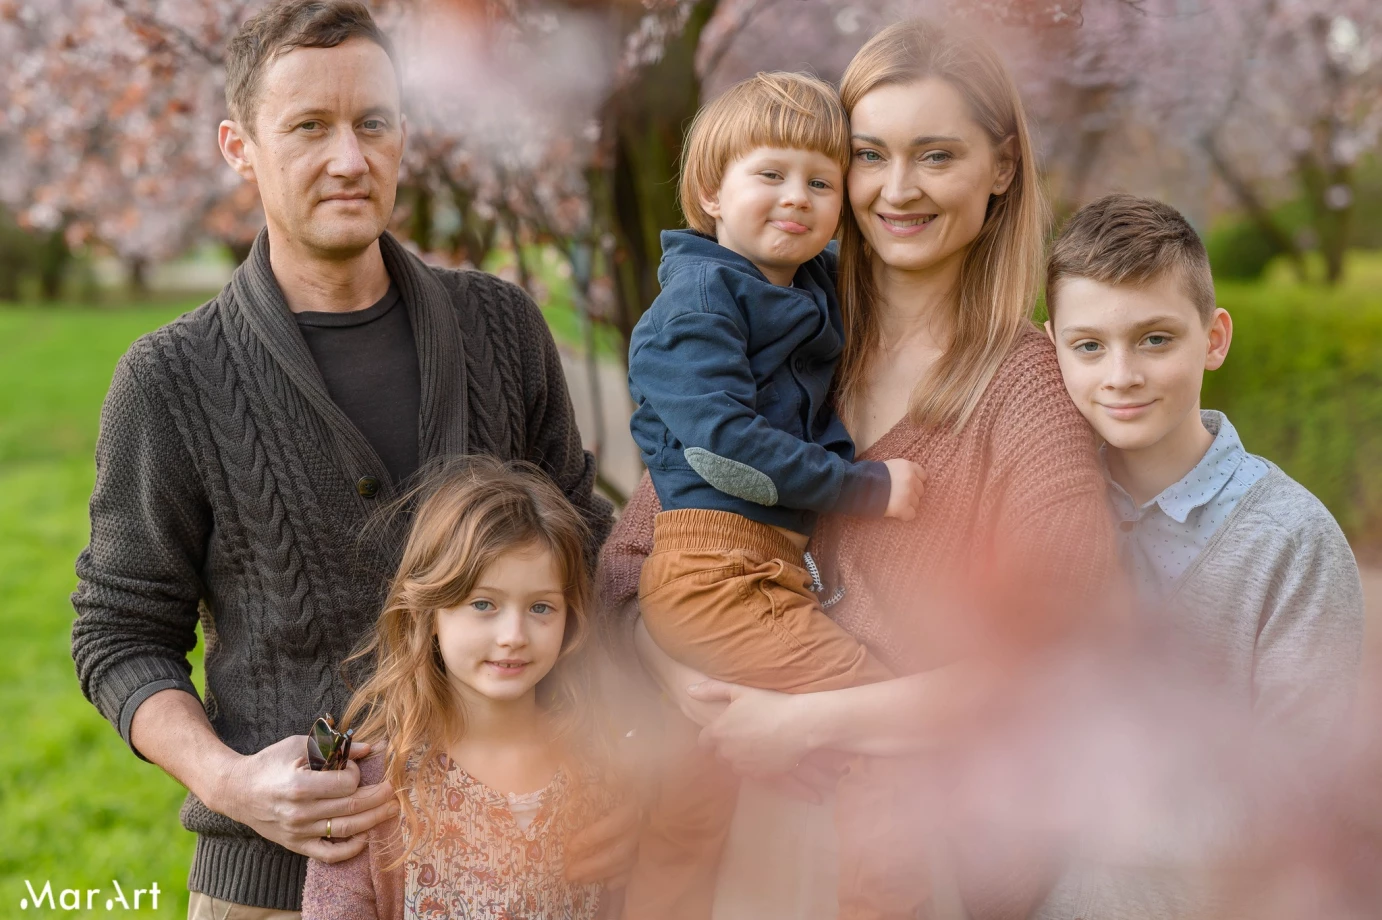 zdjęcia wroclaw fotograf mar-art-fotografia-wroclaw portfolio zdjecia rodzinne fotografia rodzinna sesja